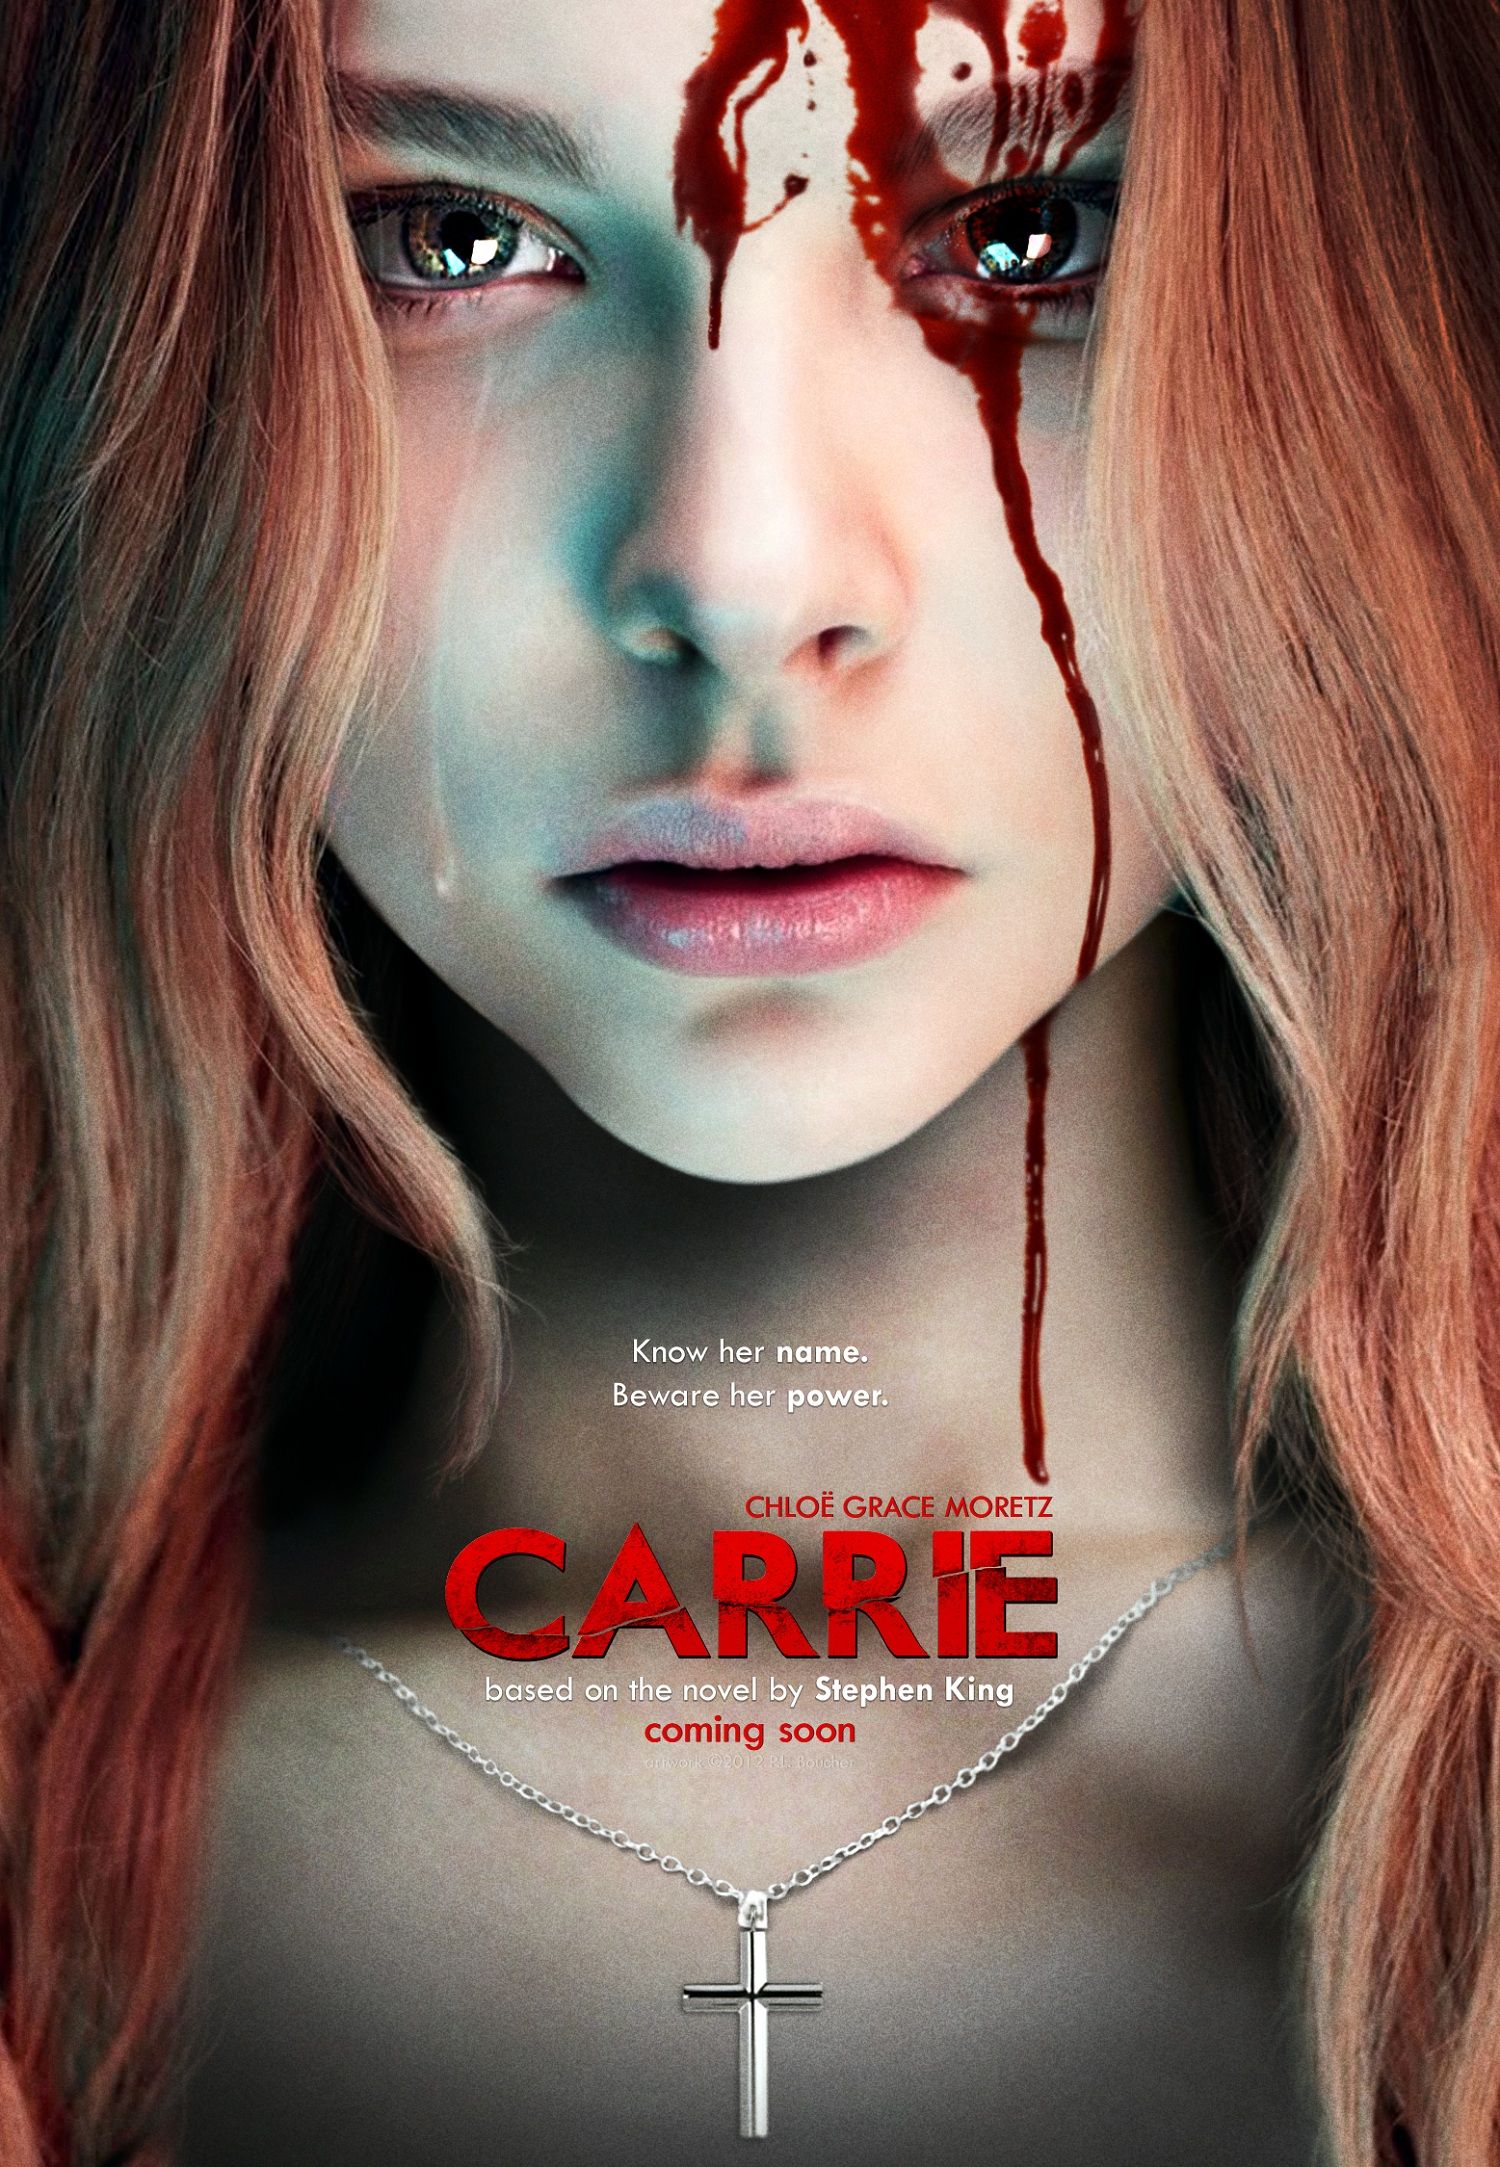 https://www.cinemascomics.com/wp-content/uploads/2012/10/carrie-poster.jpg